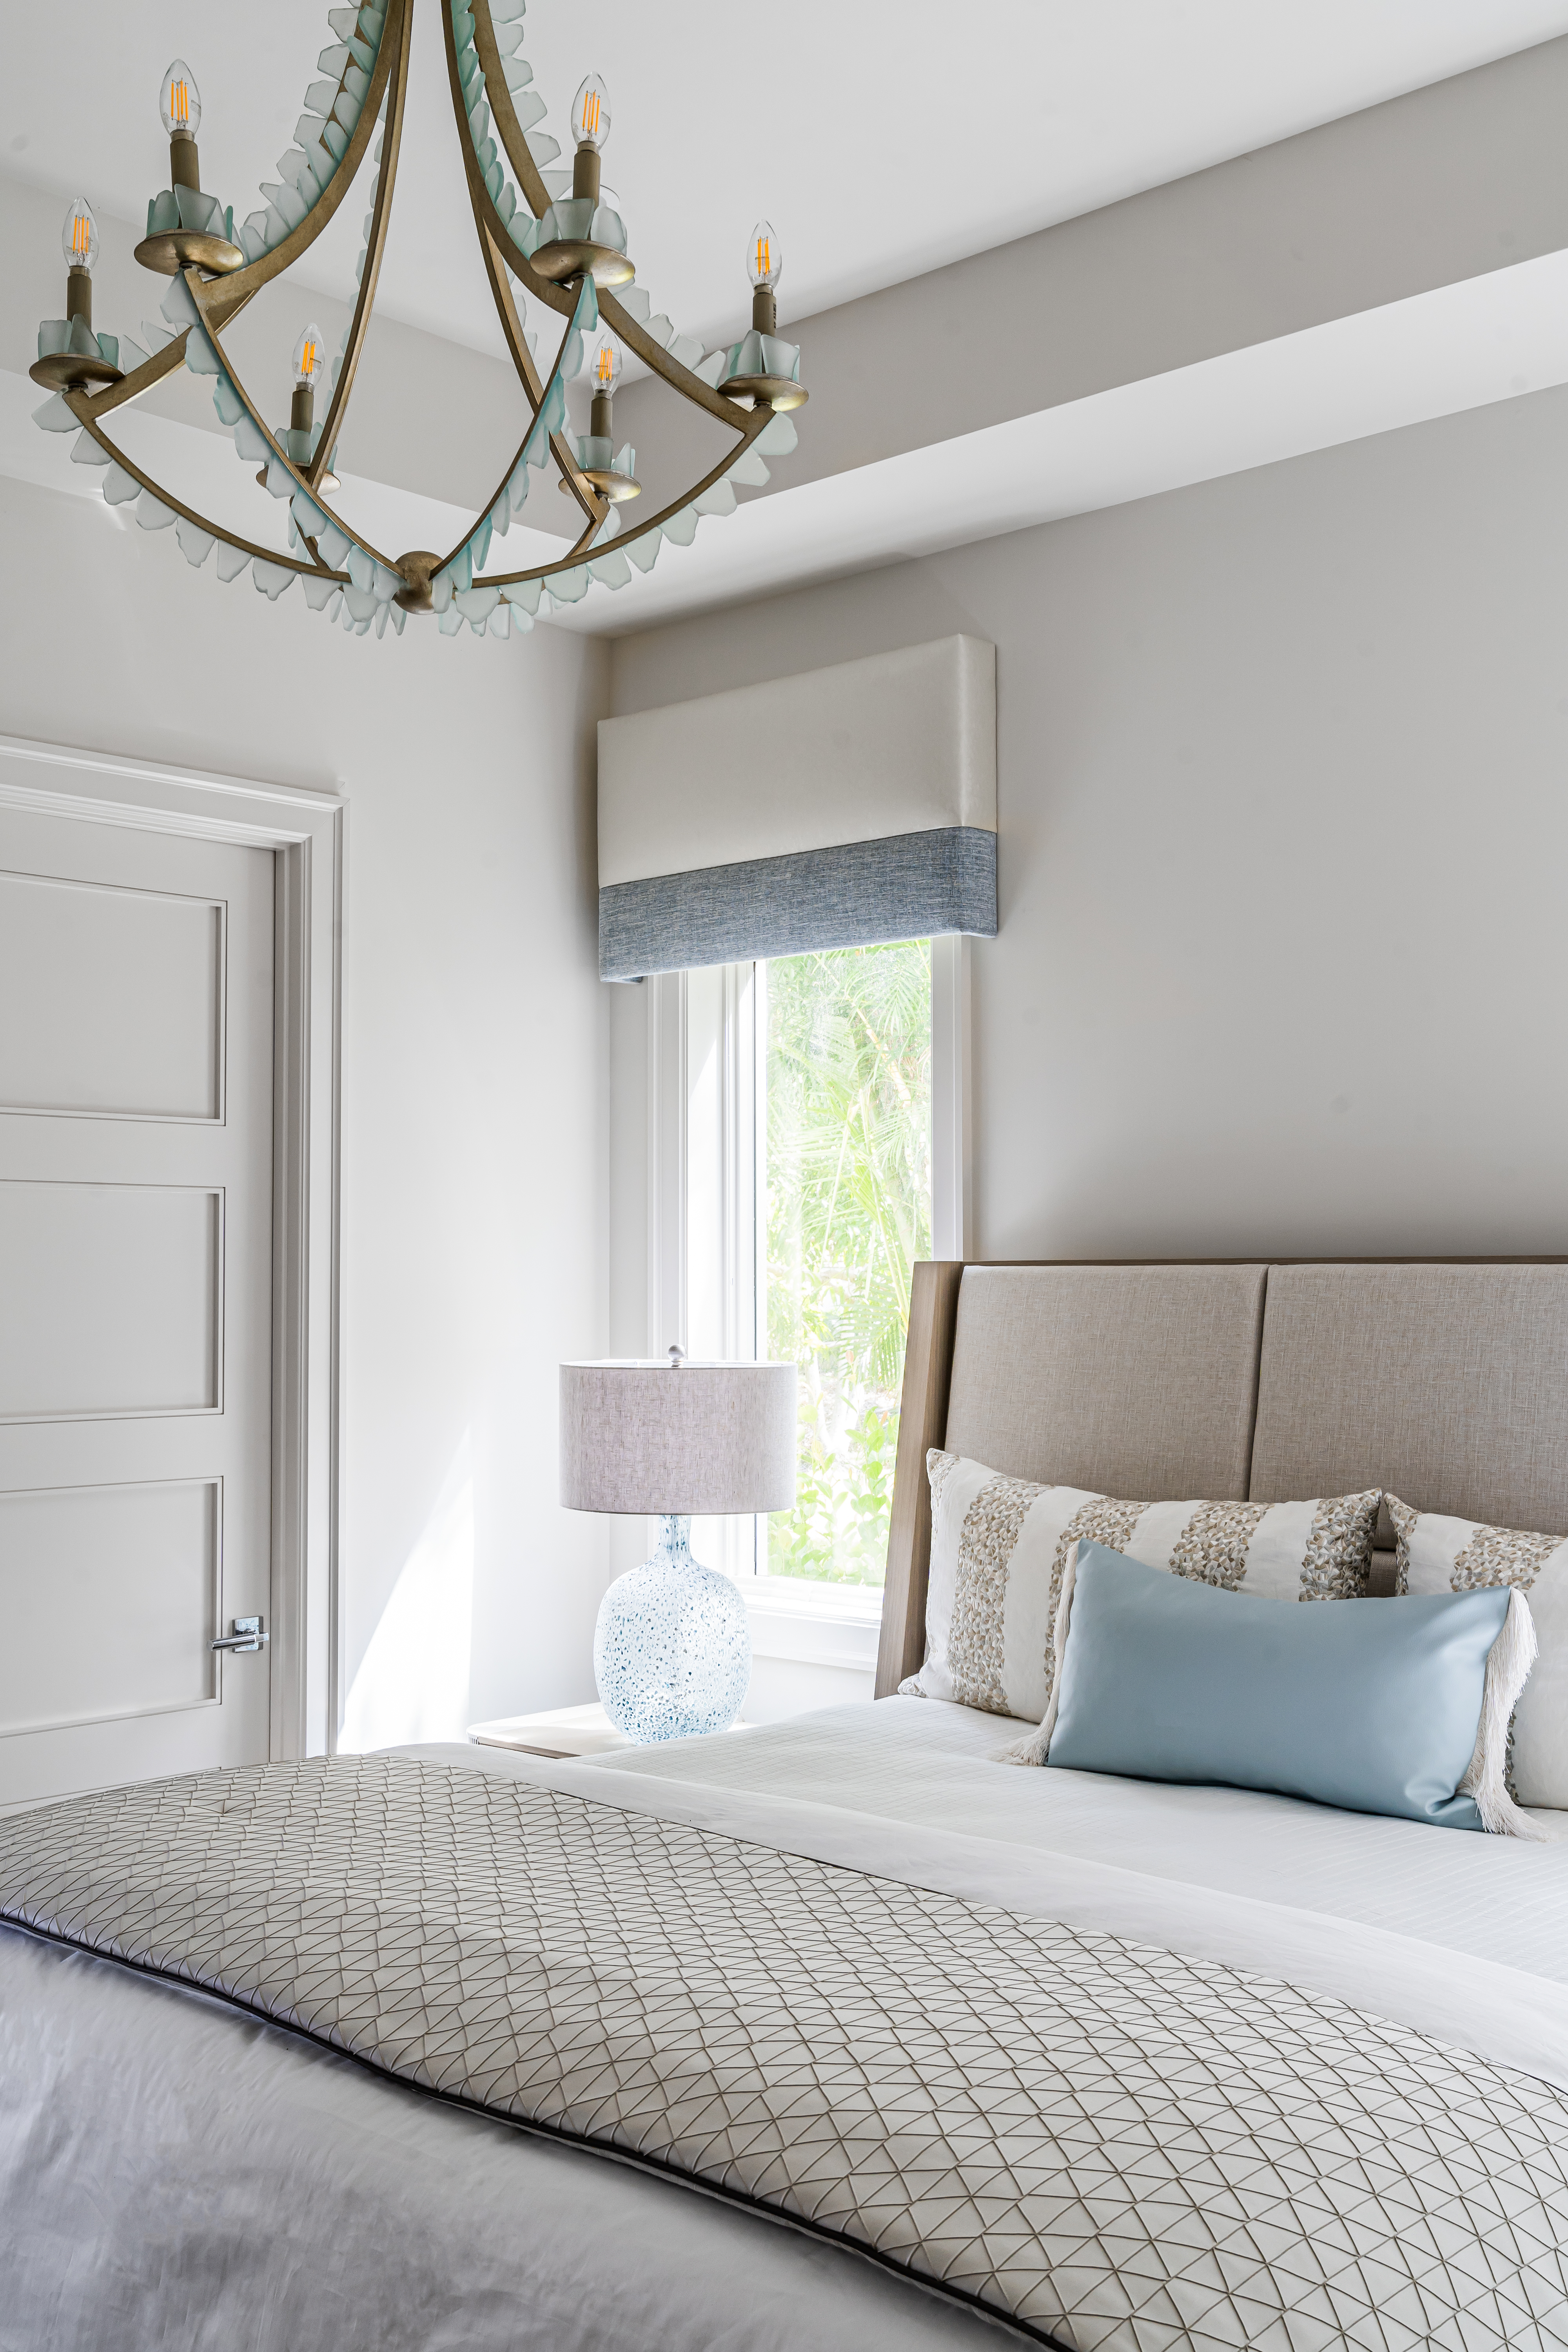 A coastal contemporary guest bedroom design with a neutral palette, designed by Florida interior designer Brooke Meyer of Gulfshore Interior Design